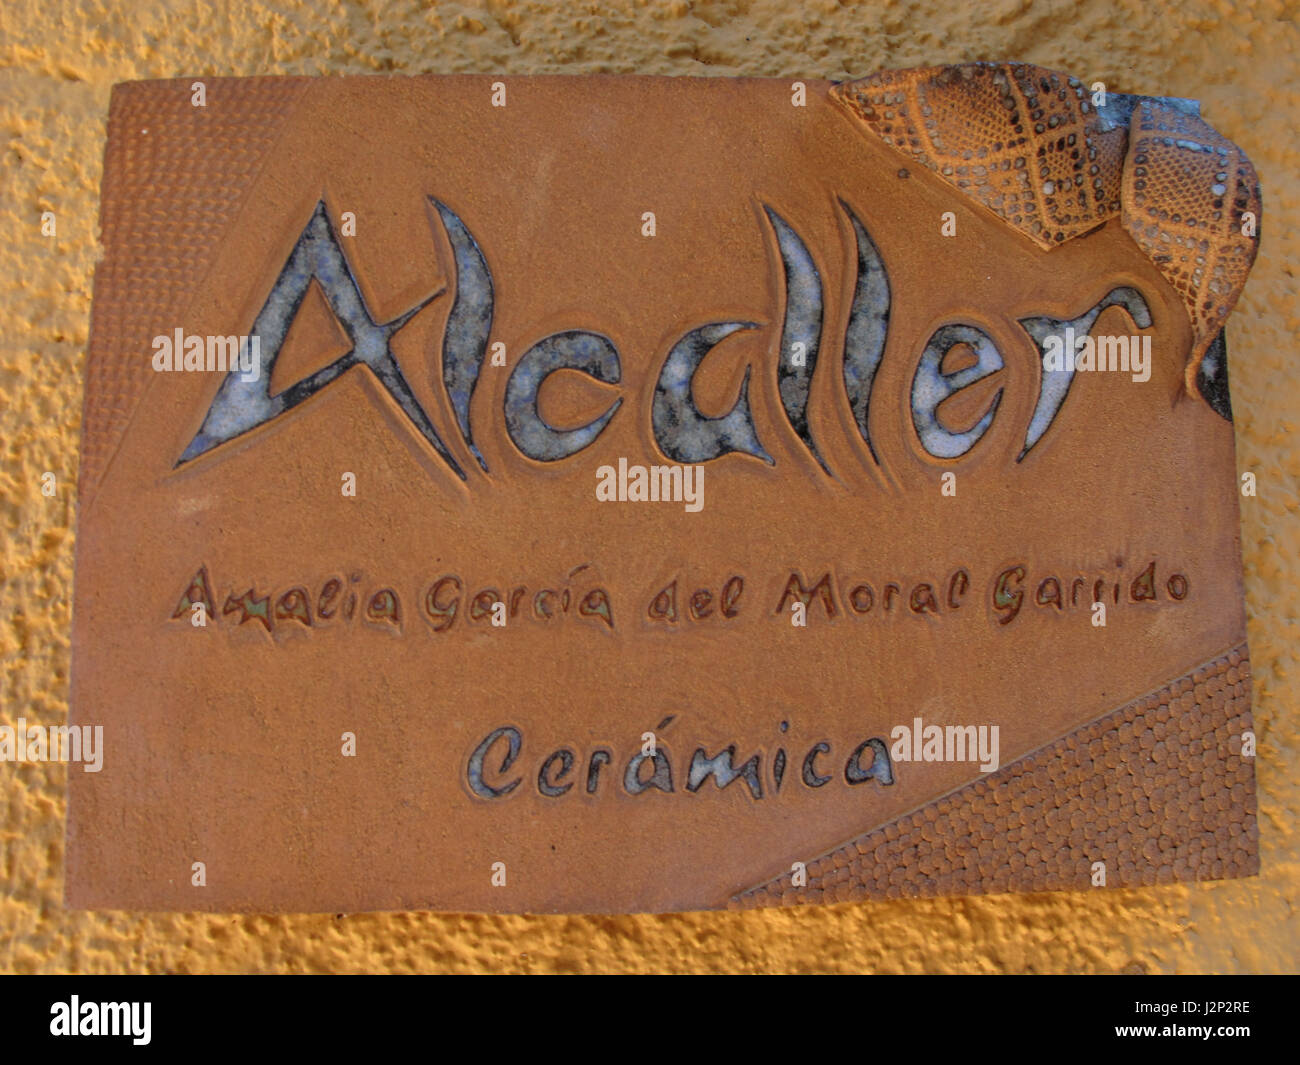 Alcaller Amalia Garcia del Moral Garrido ceramic, Almunecar, Grenada province, Andalousia, Costa  Tropical, Spain, Europe Stock Photo